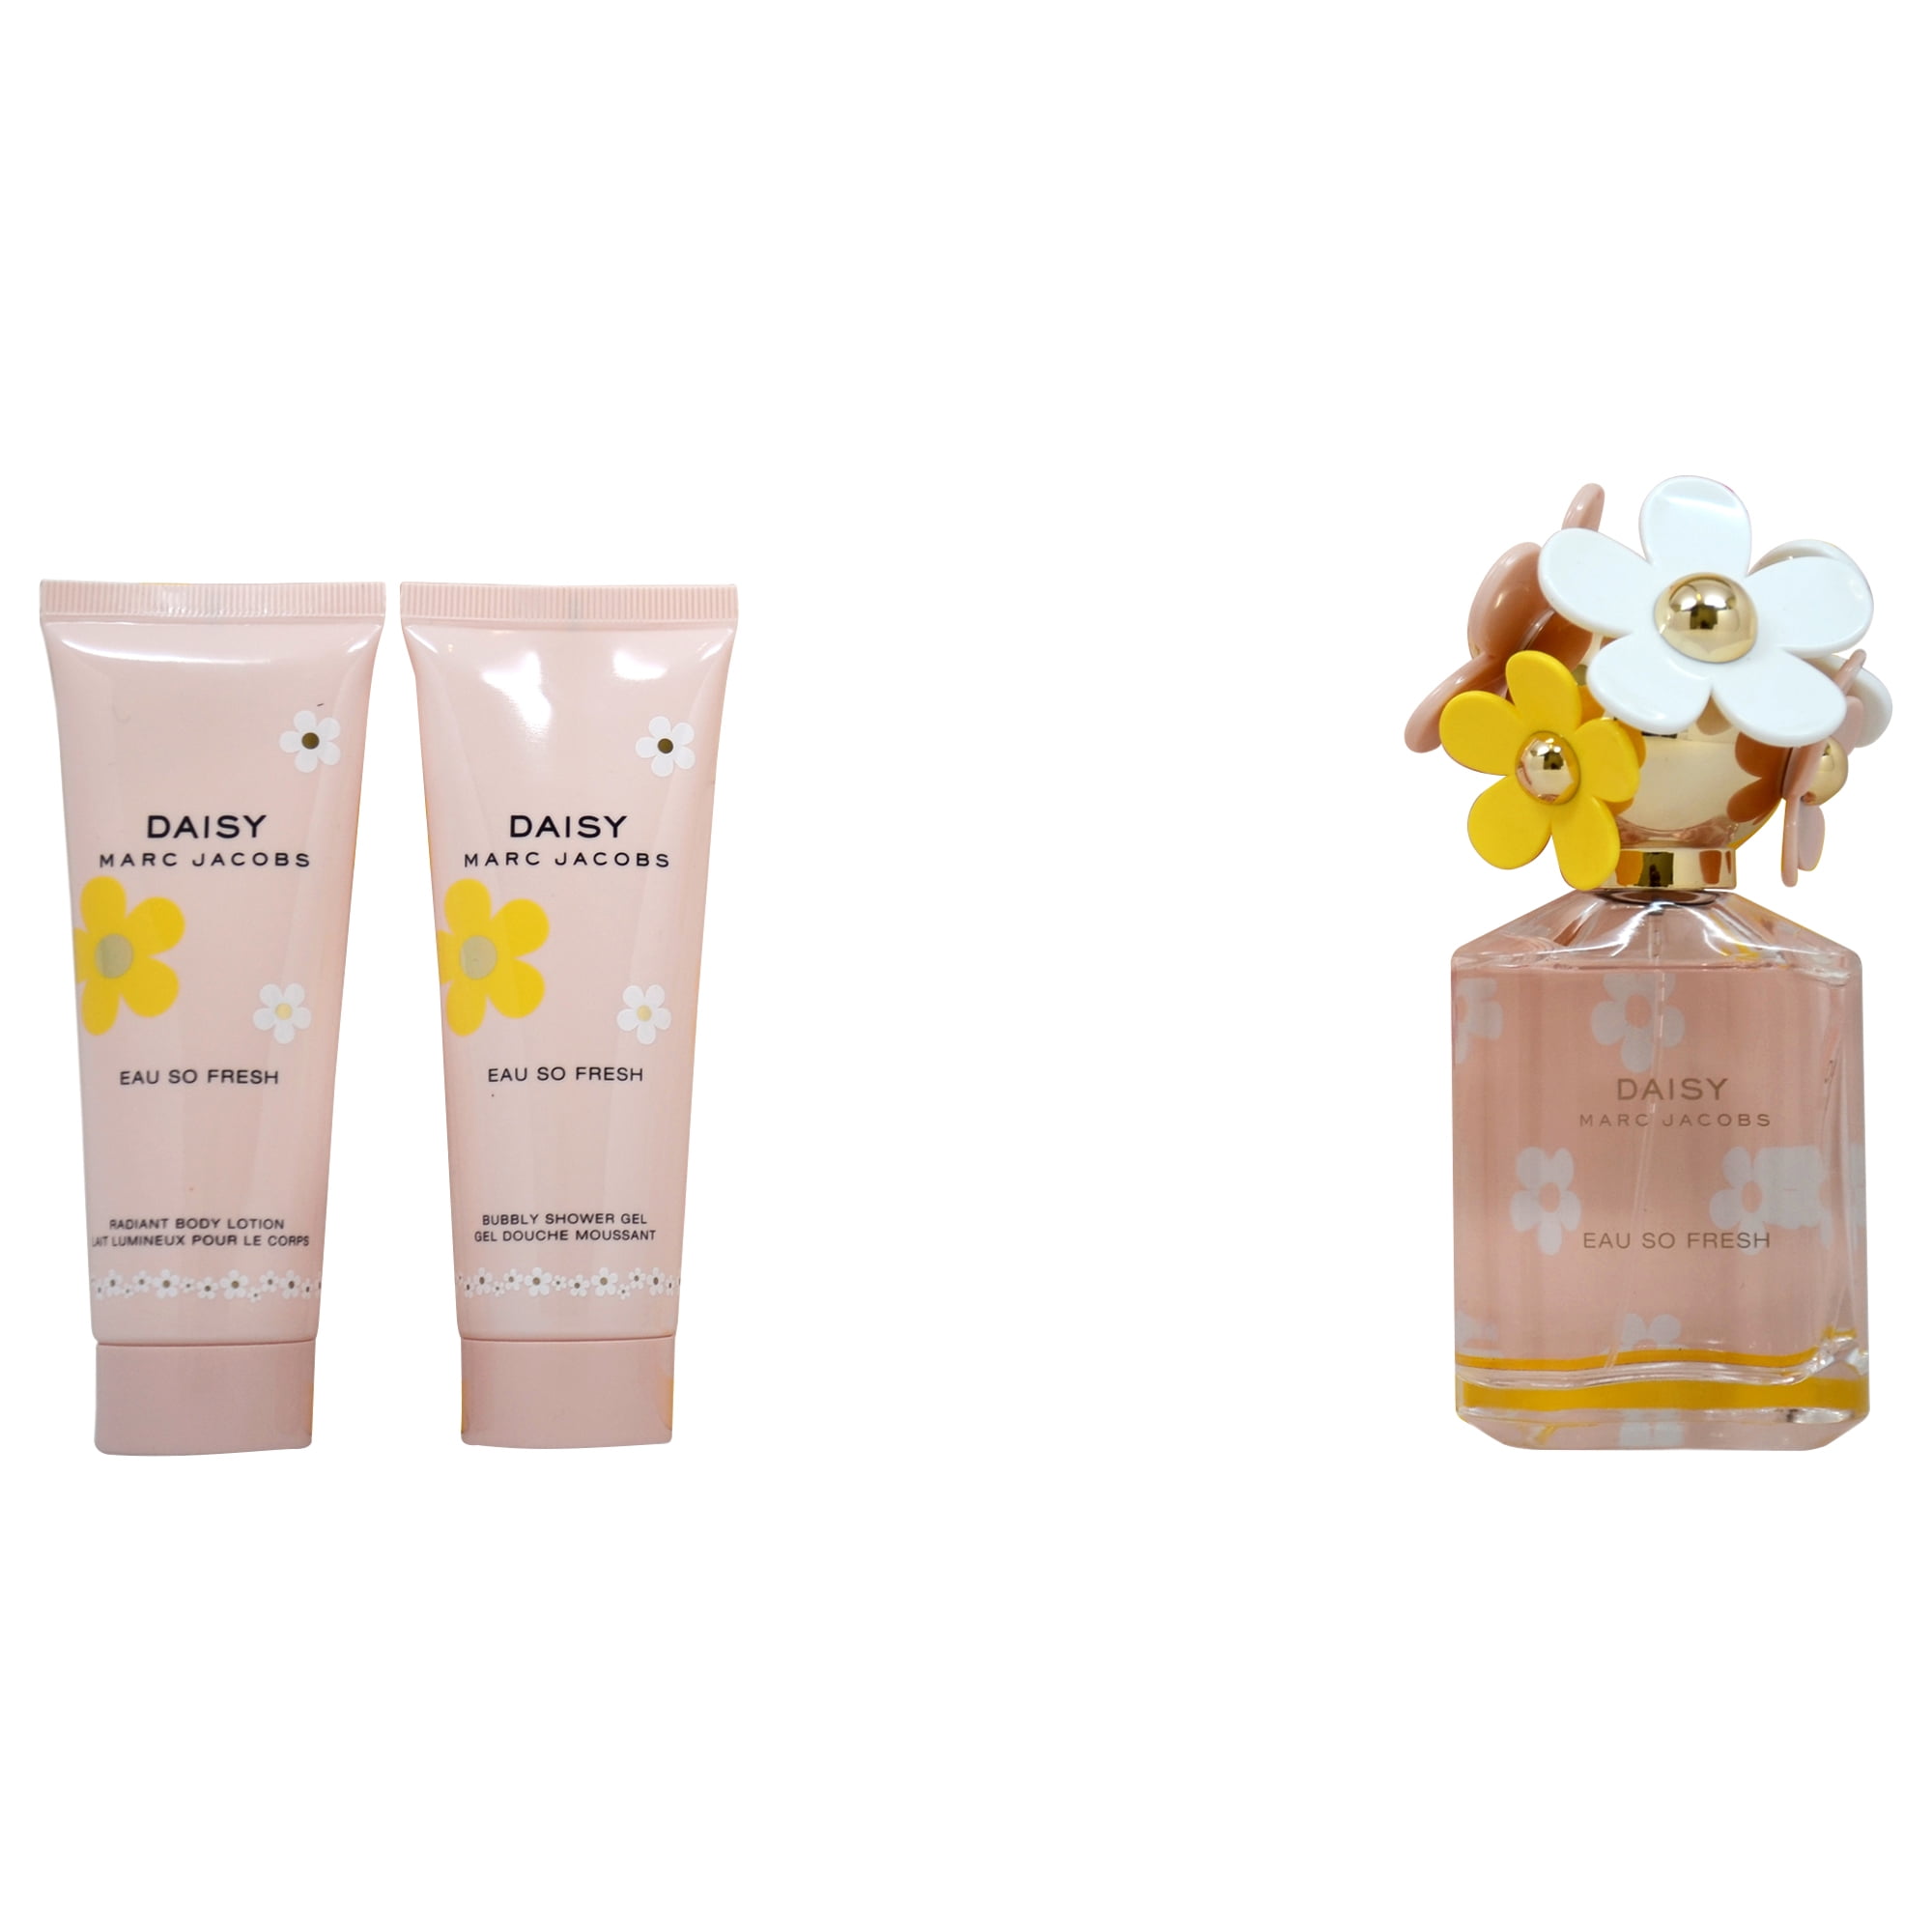 Marc Jacobs Daisy Eau So Fresh Perfume Gift Set for Women, 3 Pieces 